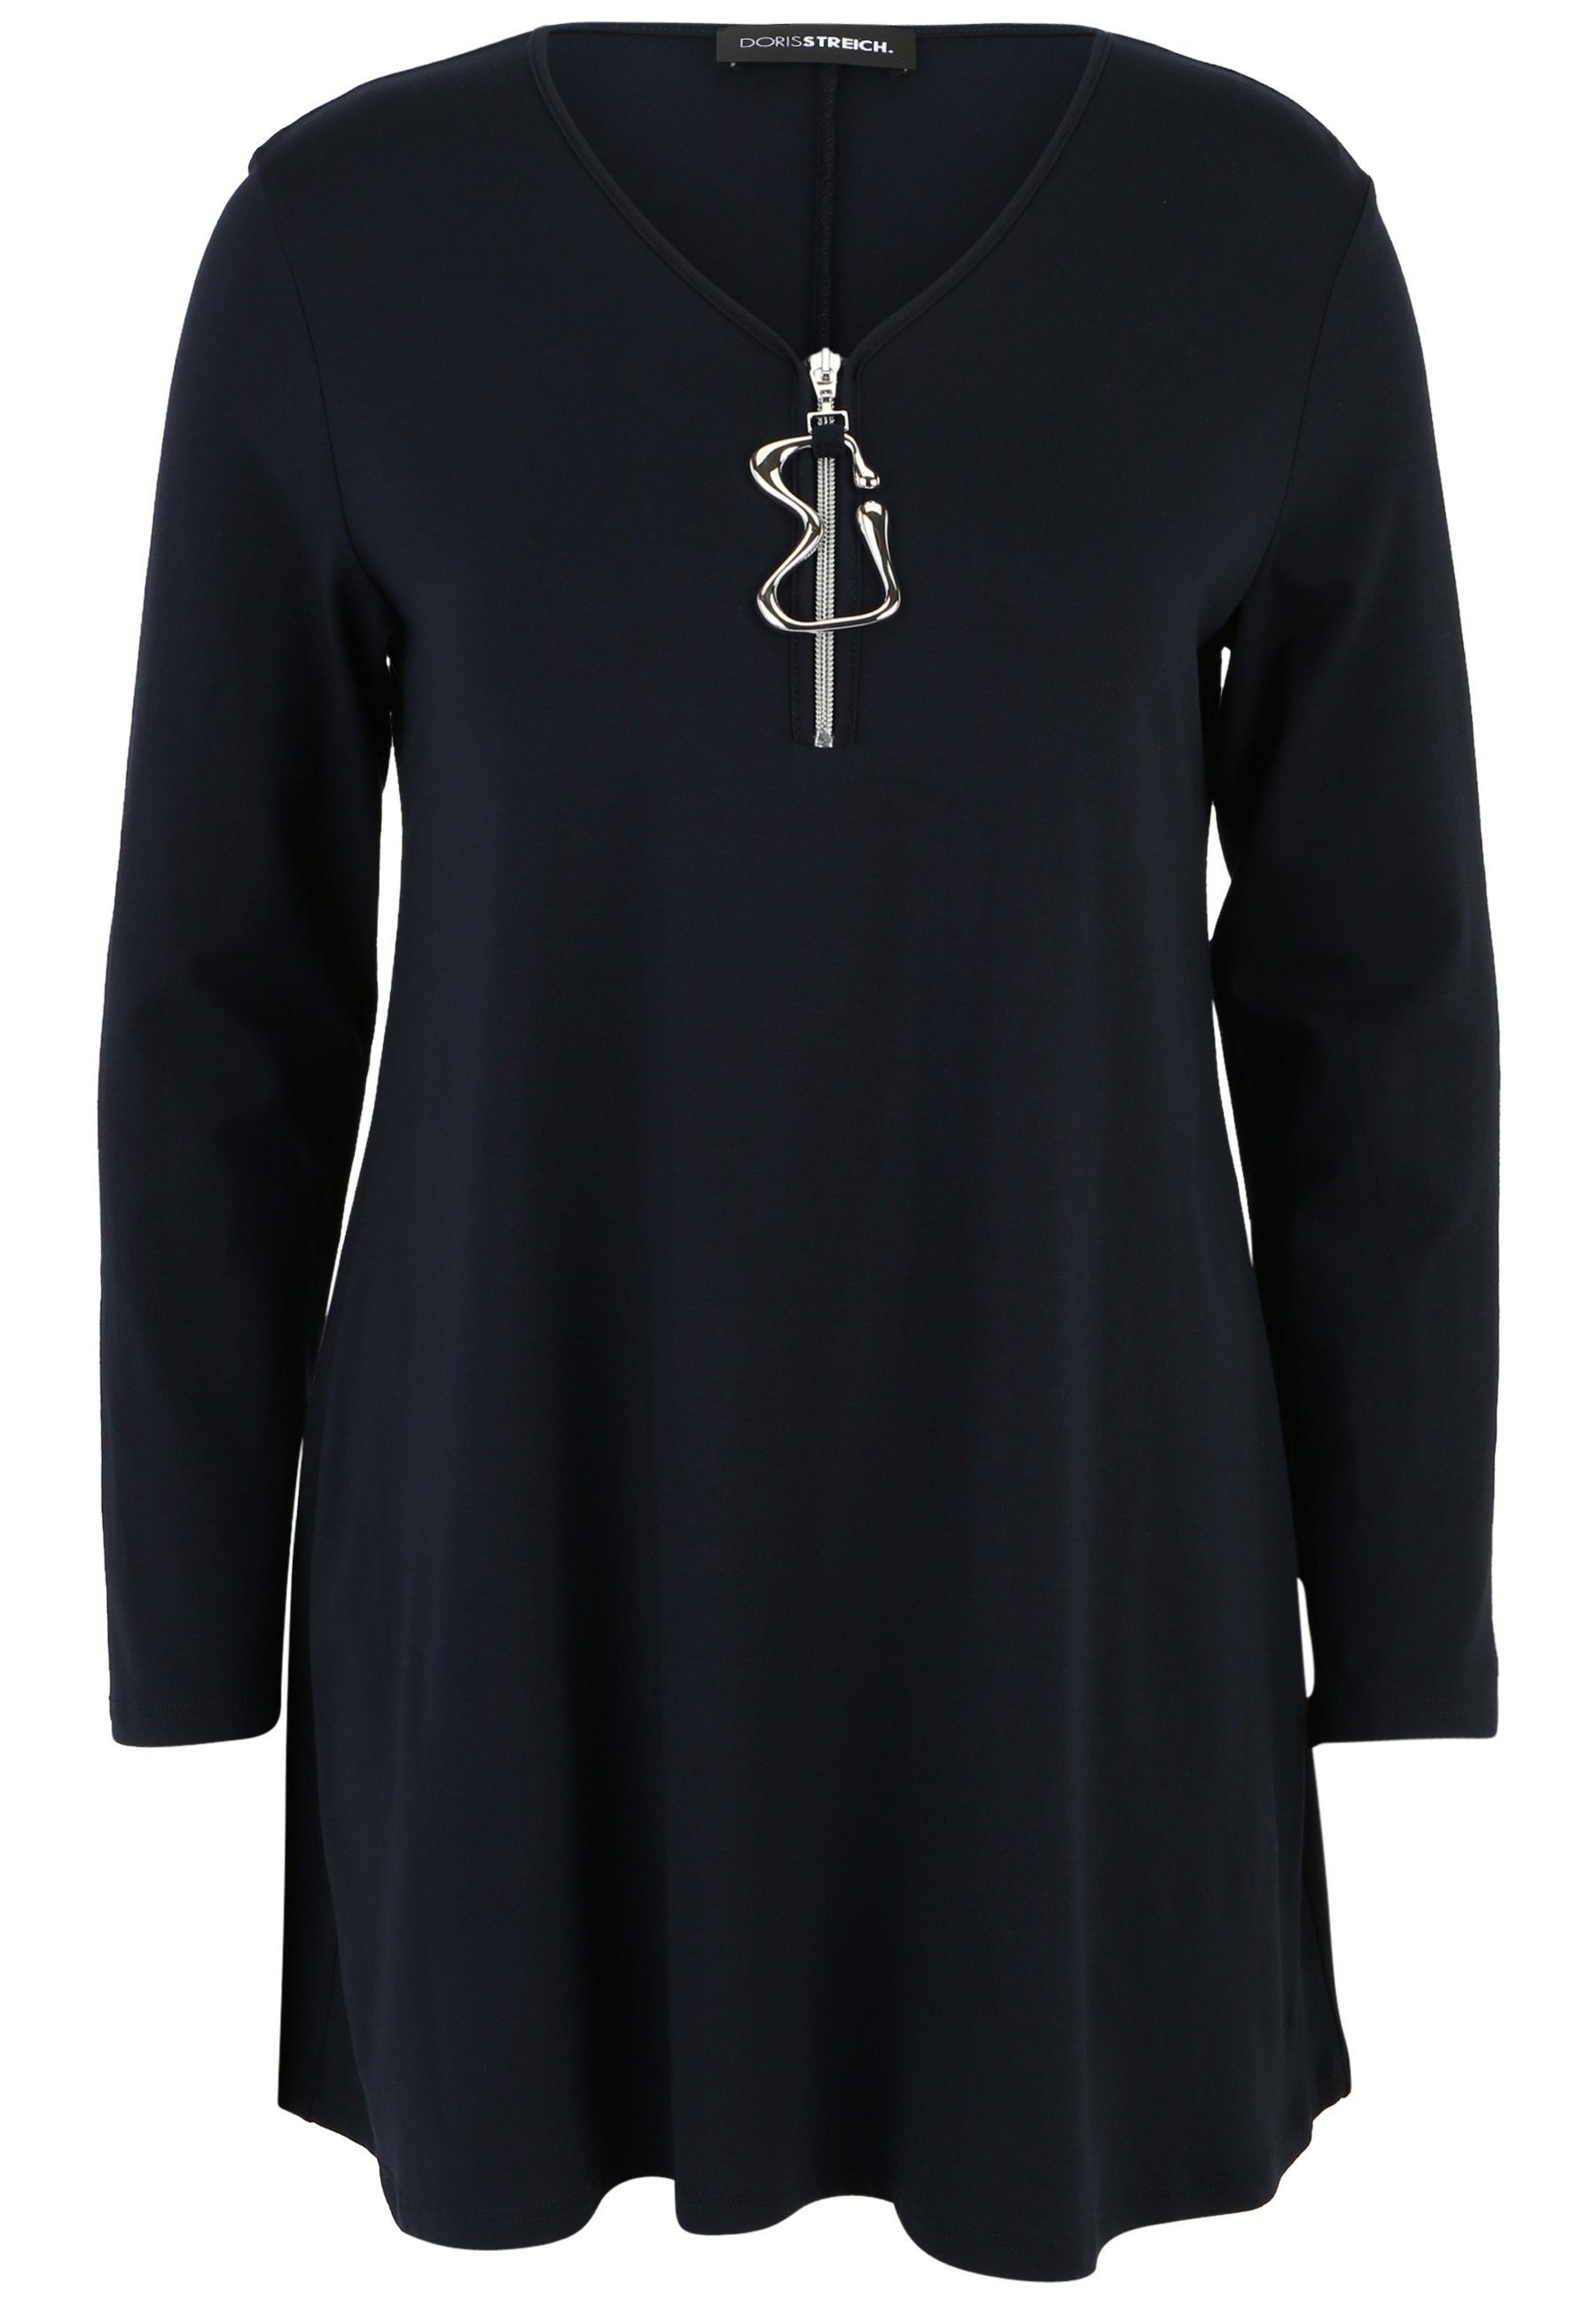 dekorativem modernem Long-Shirt Longbluse Streich Doris Design Reißverschluss ultramarinblau mit mit